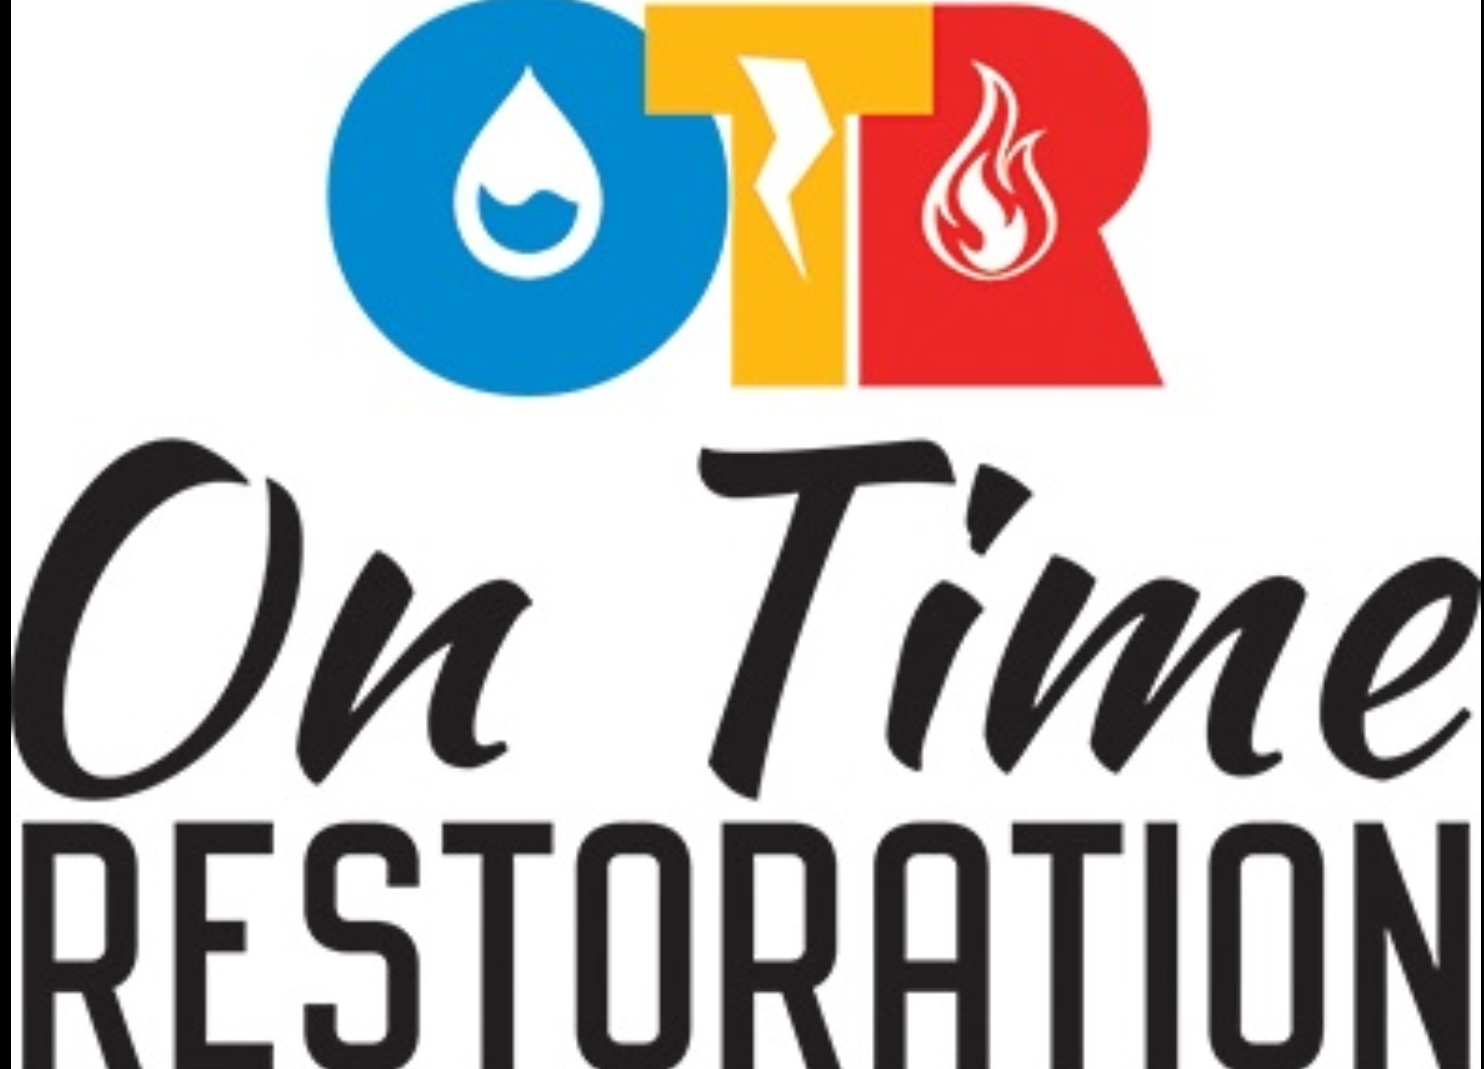 On Time Restoration, LLC Logo